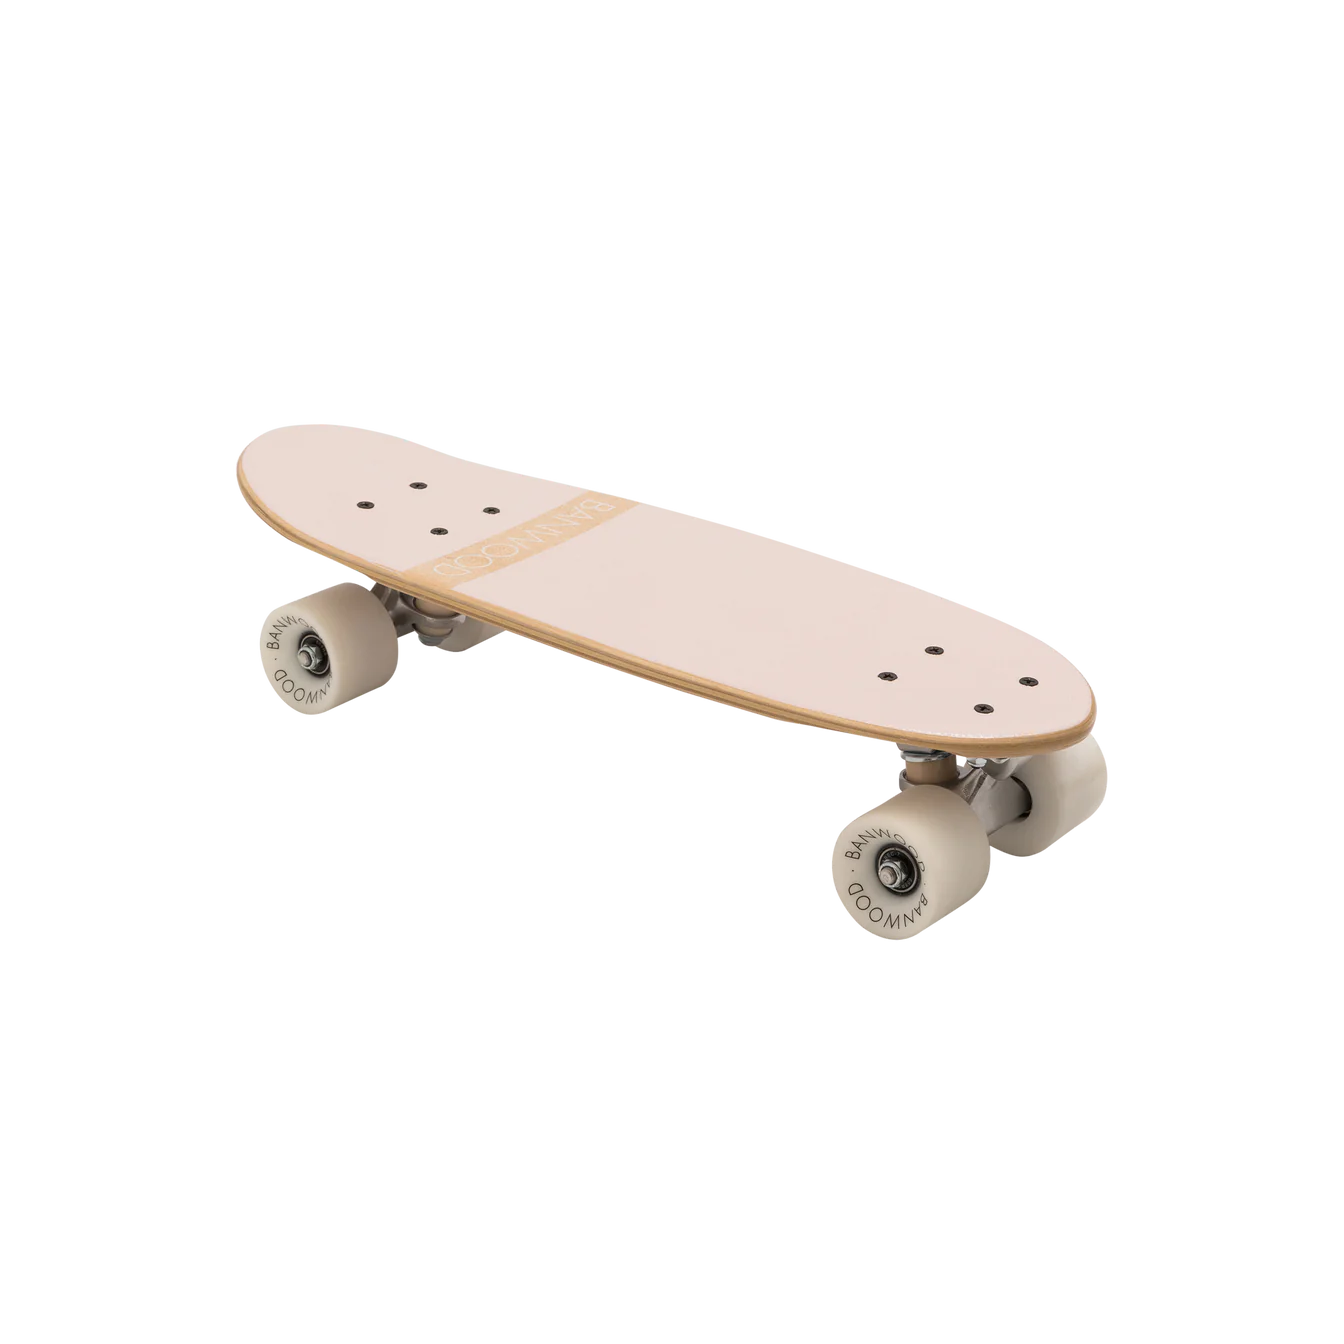 Banwood Skateboard Pink